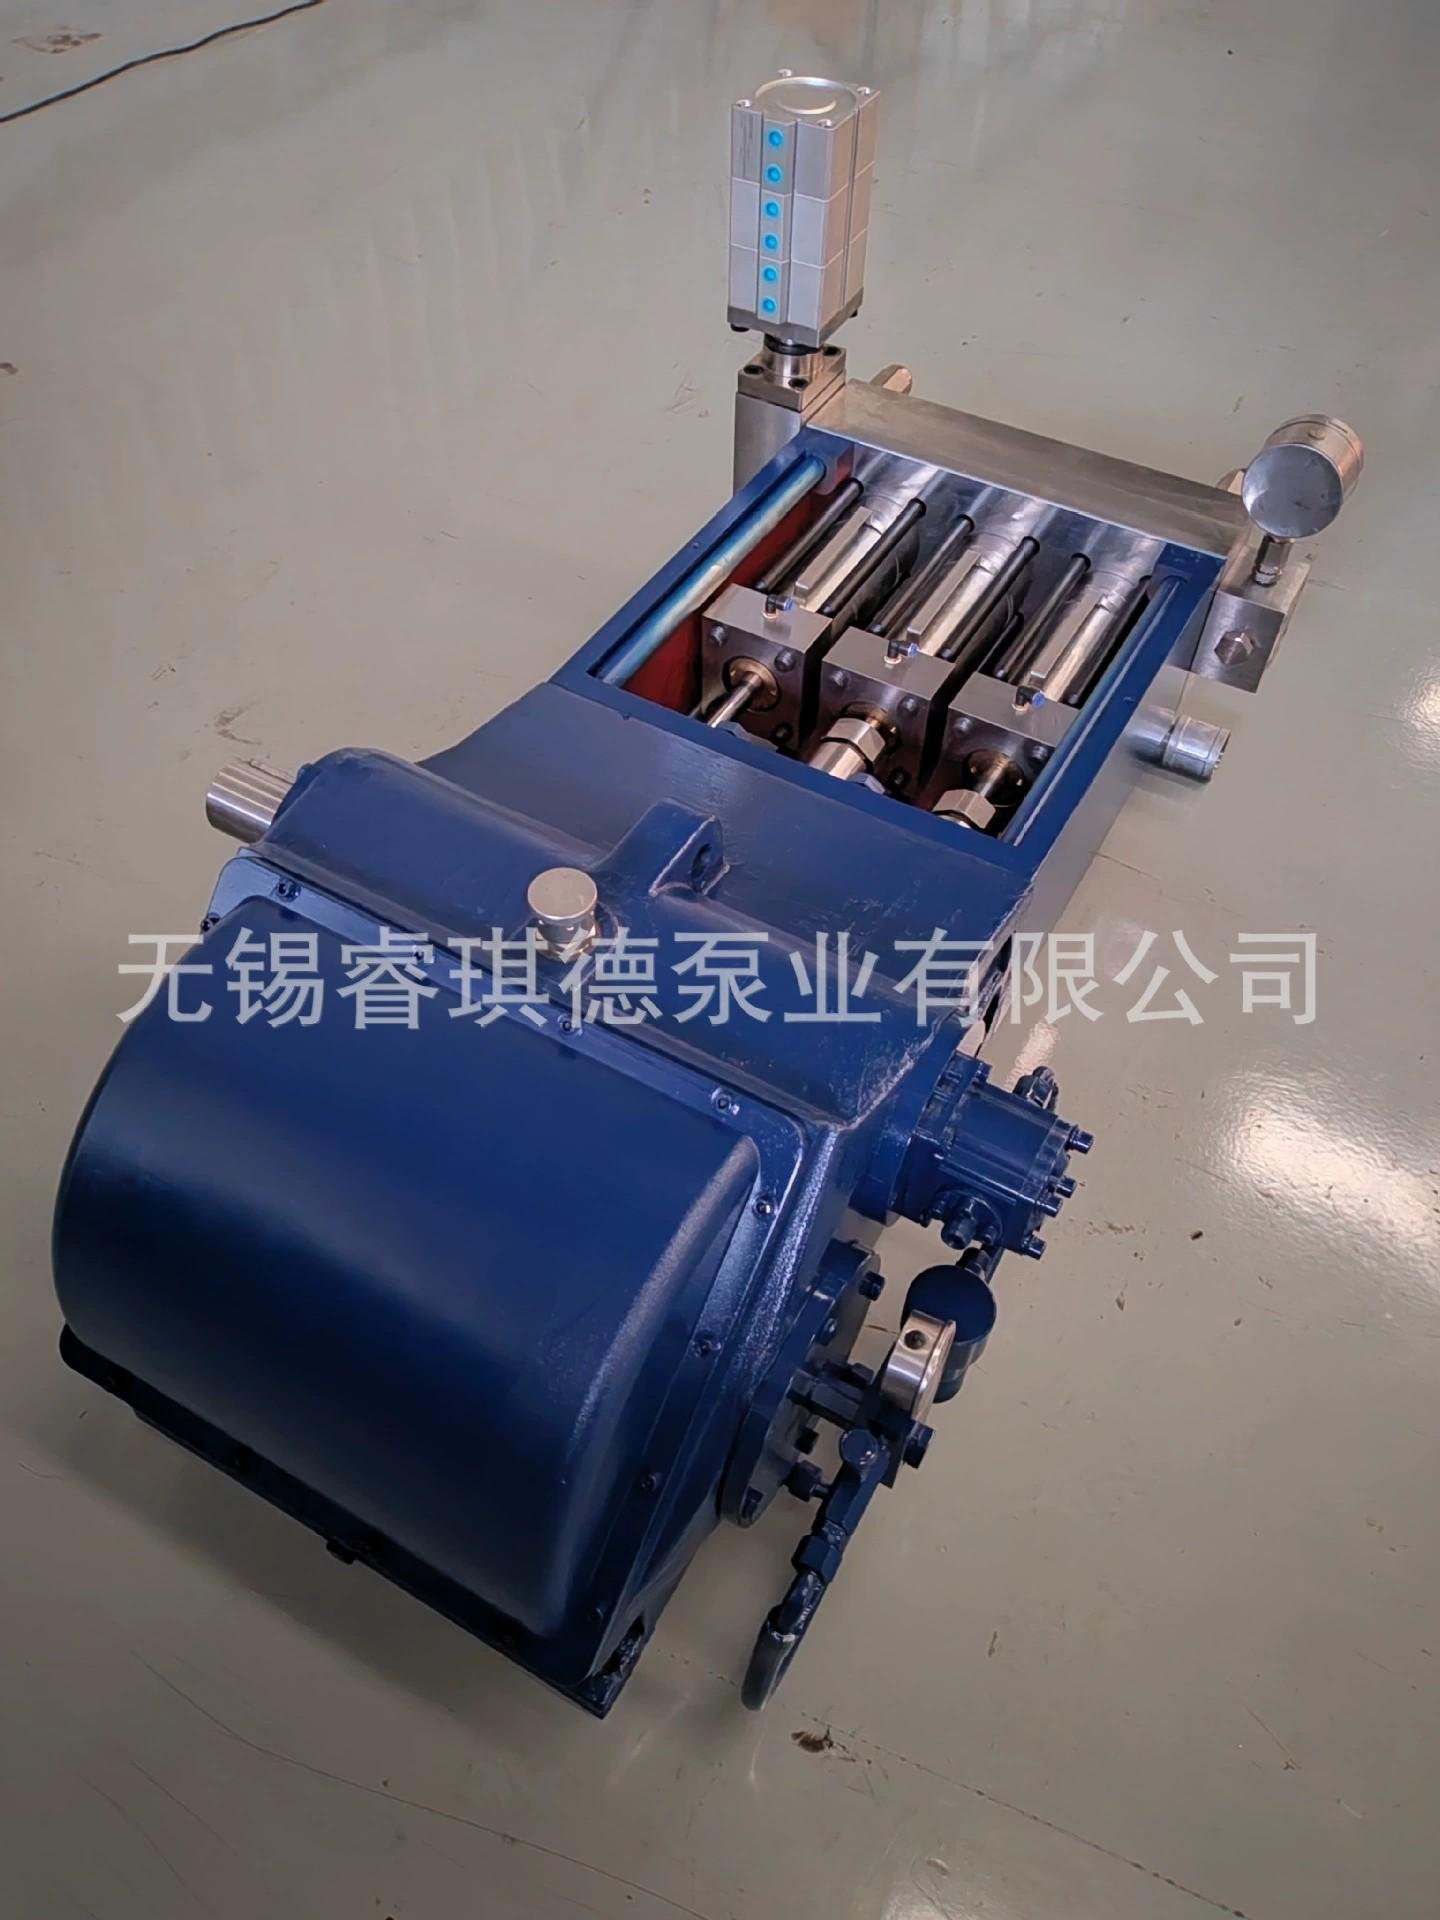 heat exchanger cleaning high pressure pump, high pressure plunger pump WP3Q-S 3